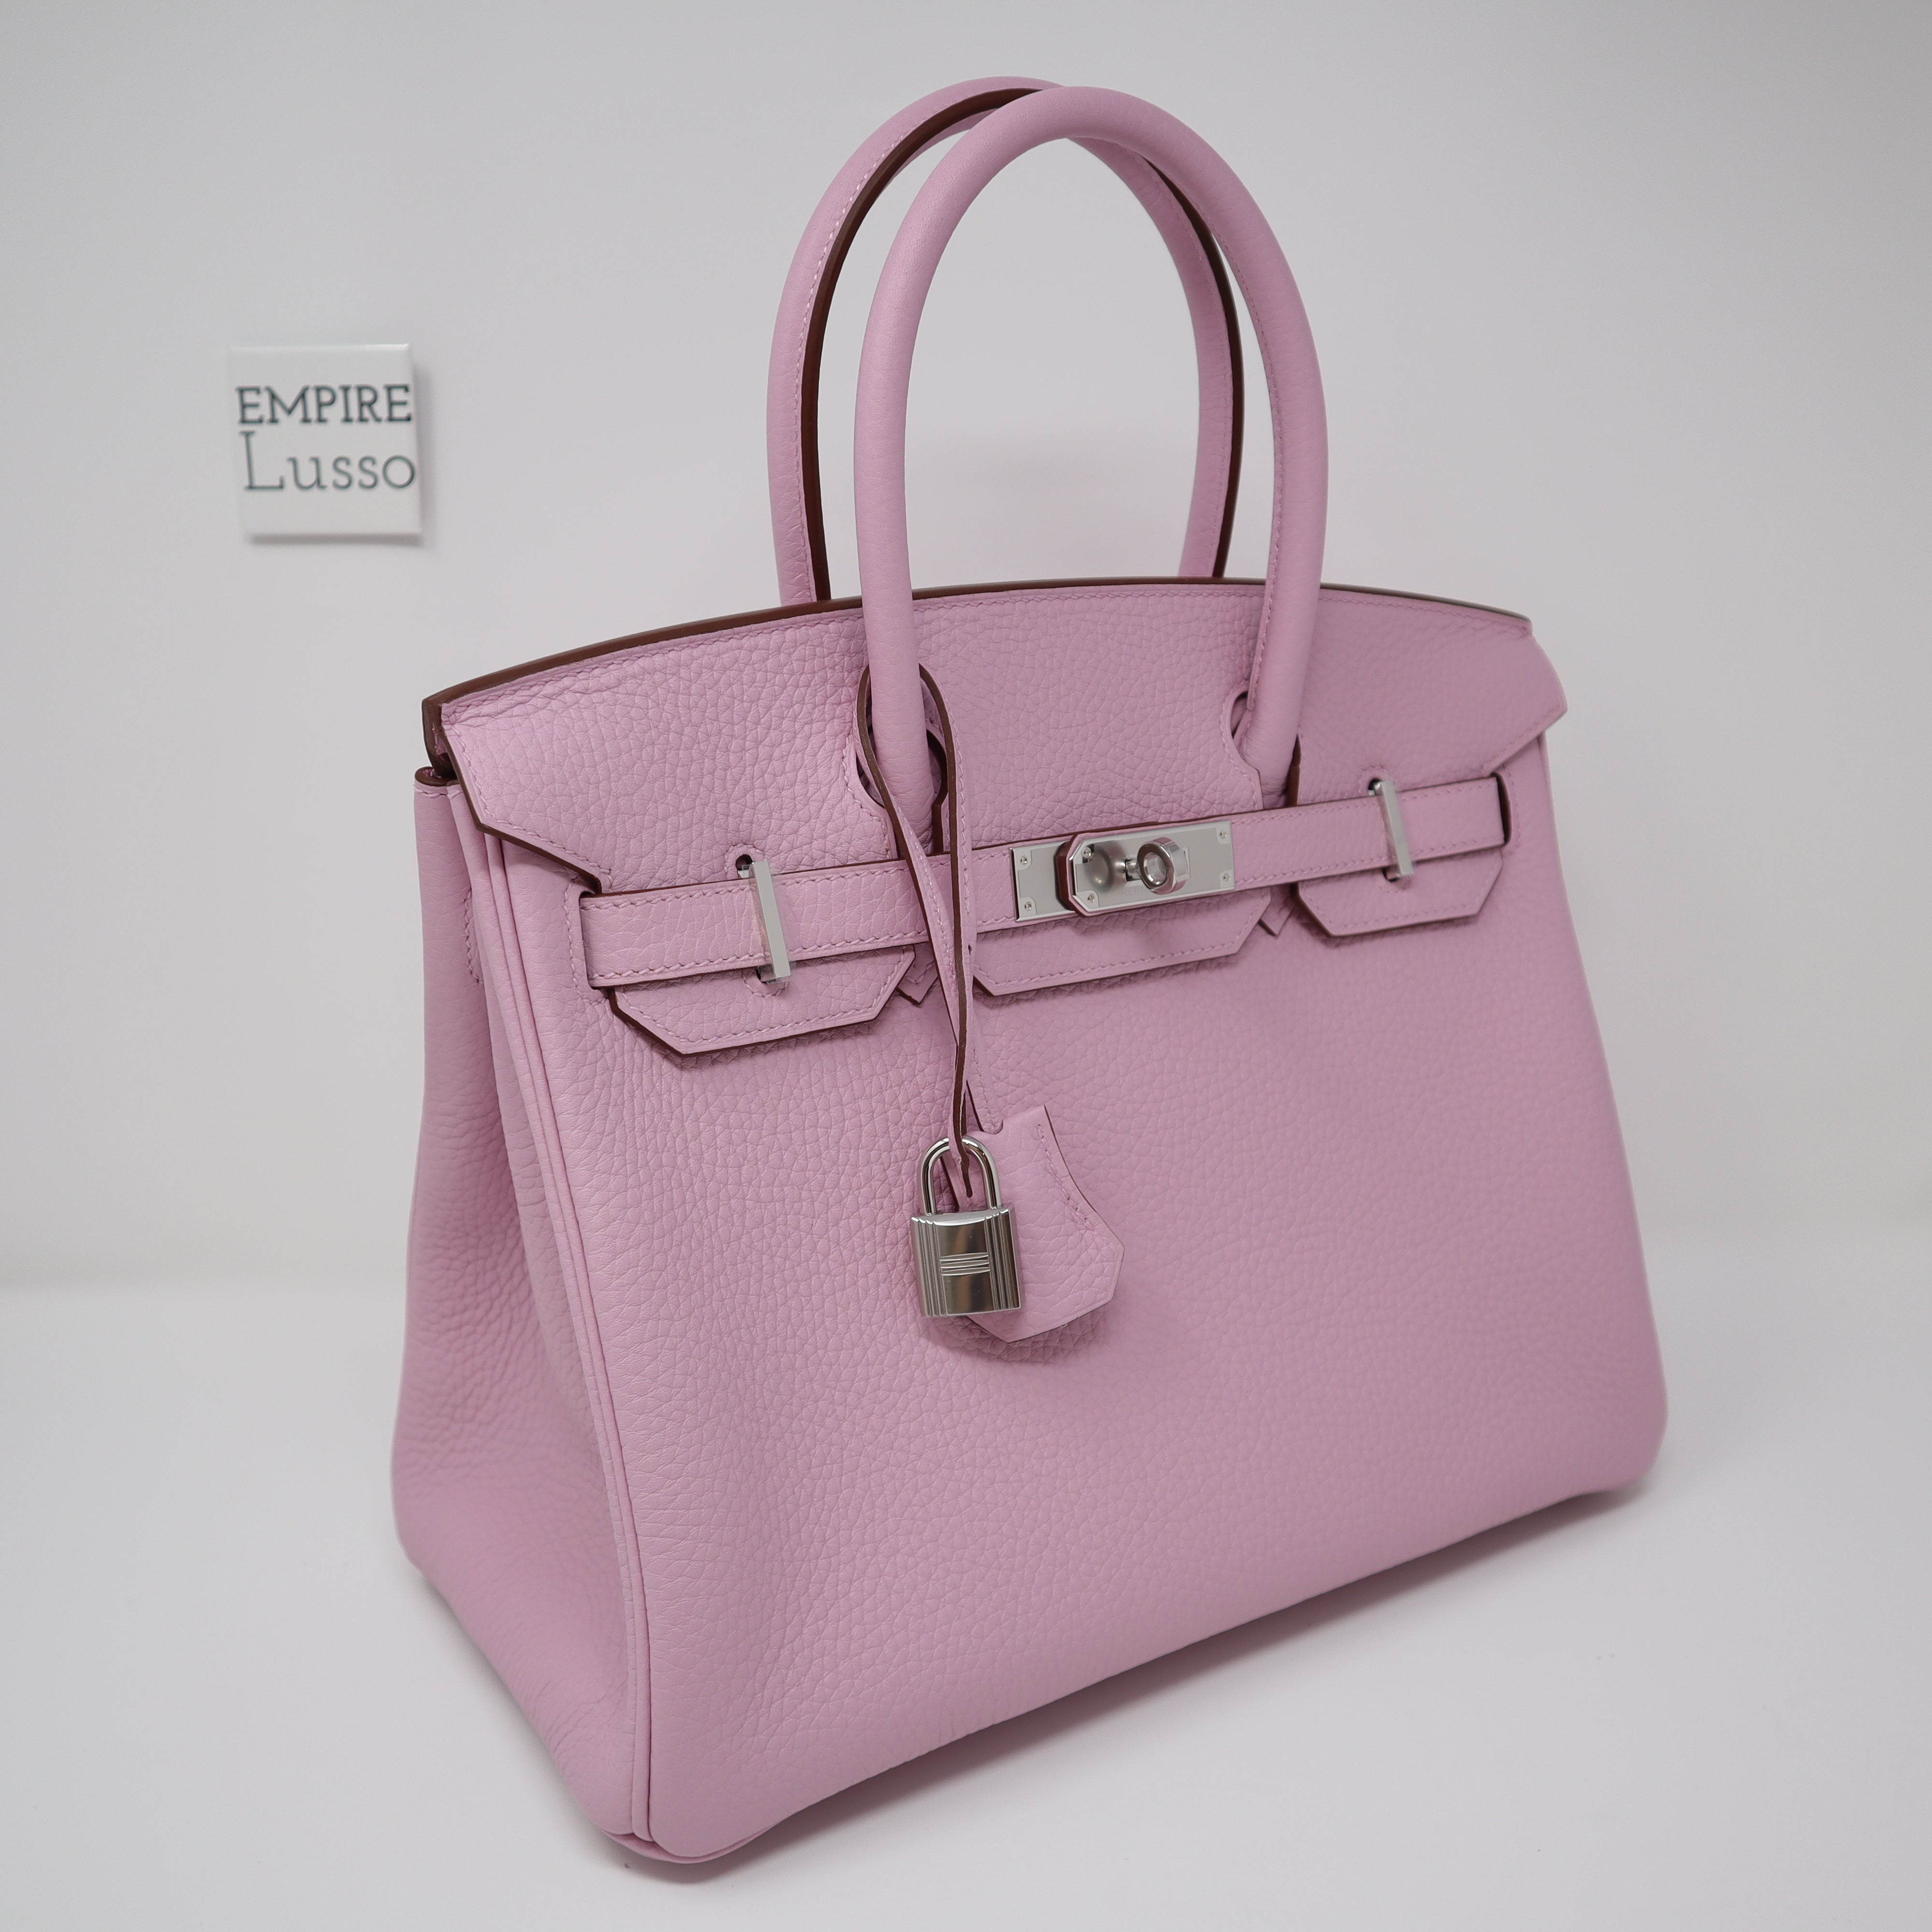 Hermès Birkin 25 Top Handle Bag In Black Togo With Rose Gold